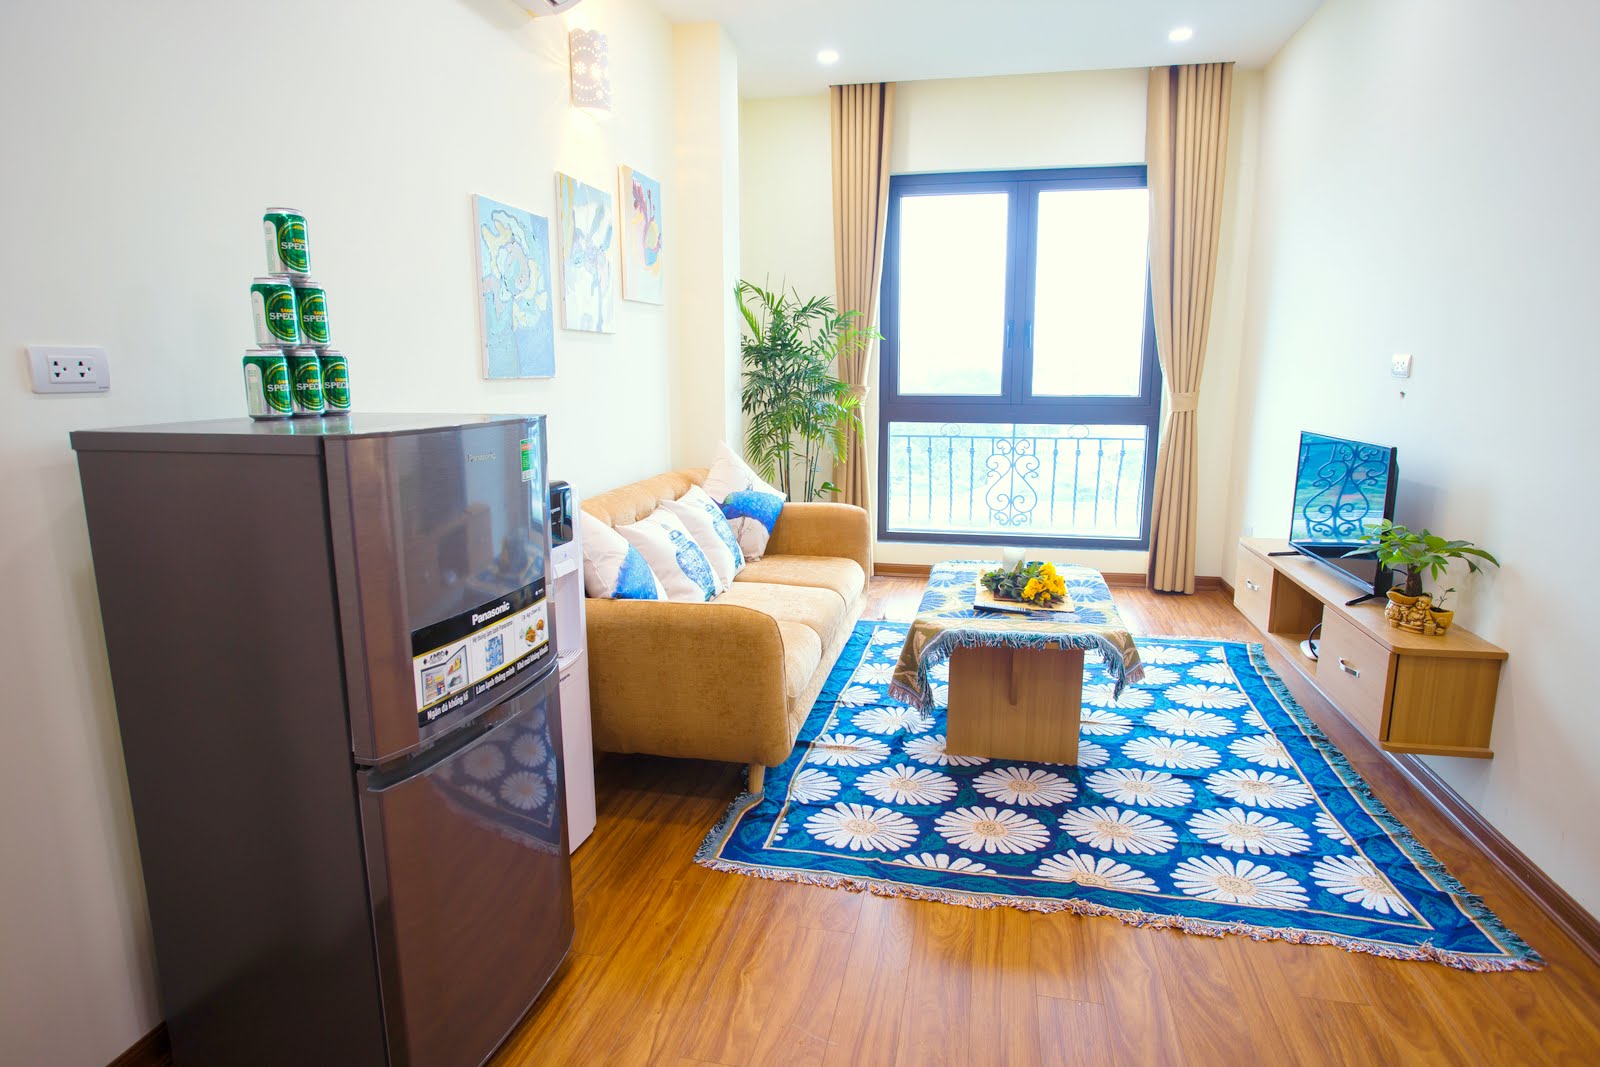 1 bedroom serviced apartment for rent on Quan Hoa street, Cau Giay